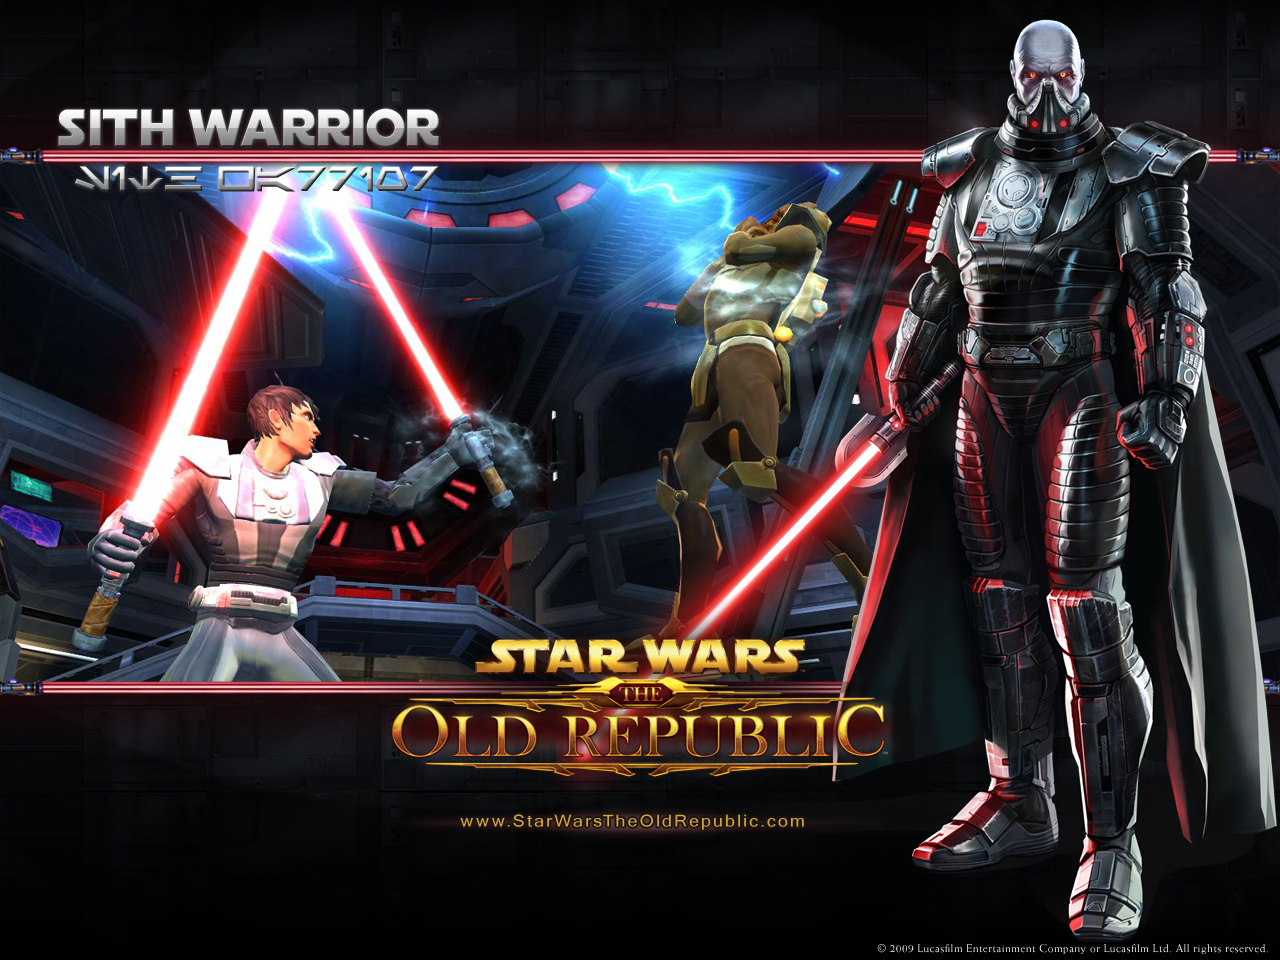 Sith Warrior - Star Wars wallpaper 16 - Star Wars The Old